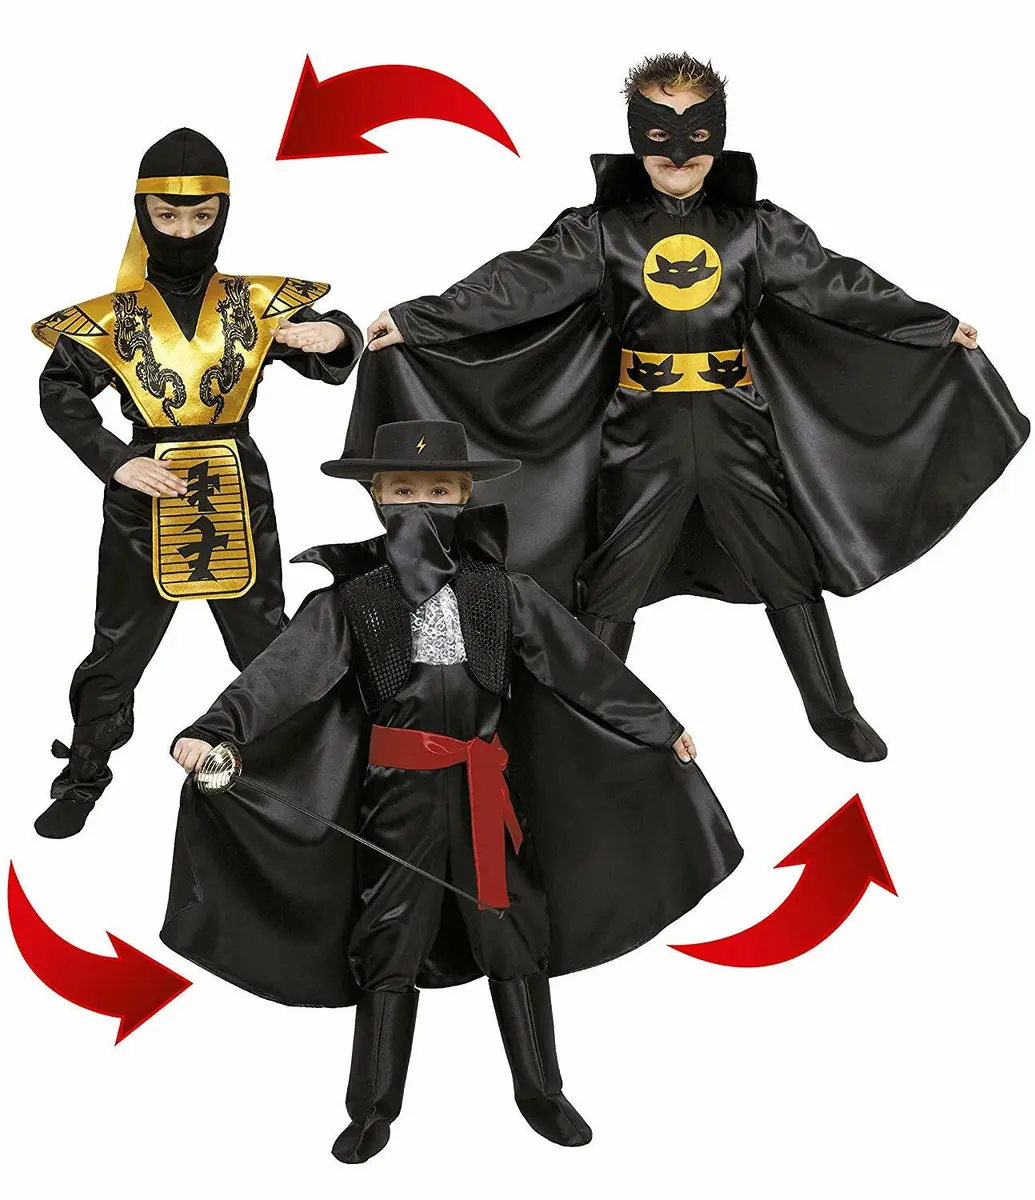 Costume Carnevale Eroi Action 3 in 1 Ninja Zorro Vestito Bambino  trasformabile